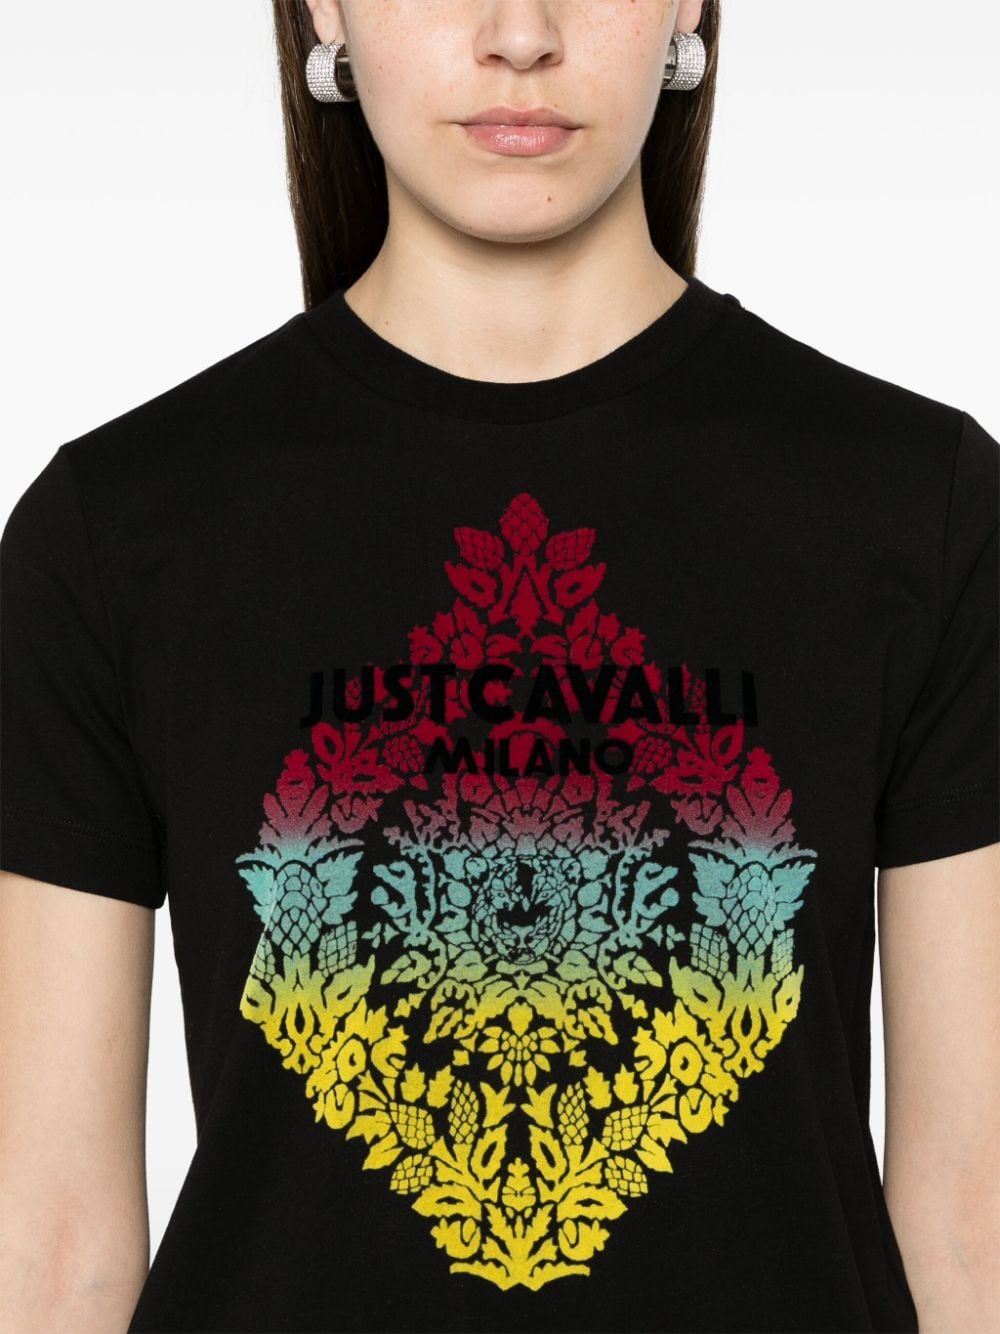 Just Cavalli T-shirt met logo Zwart